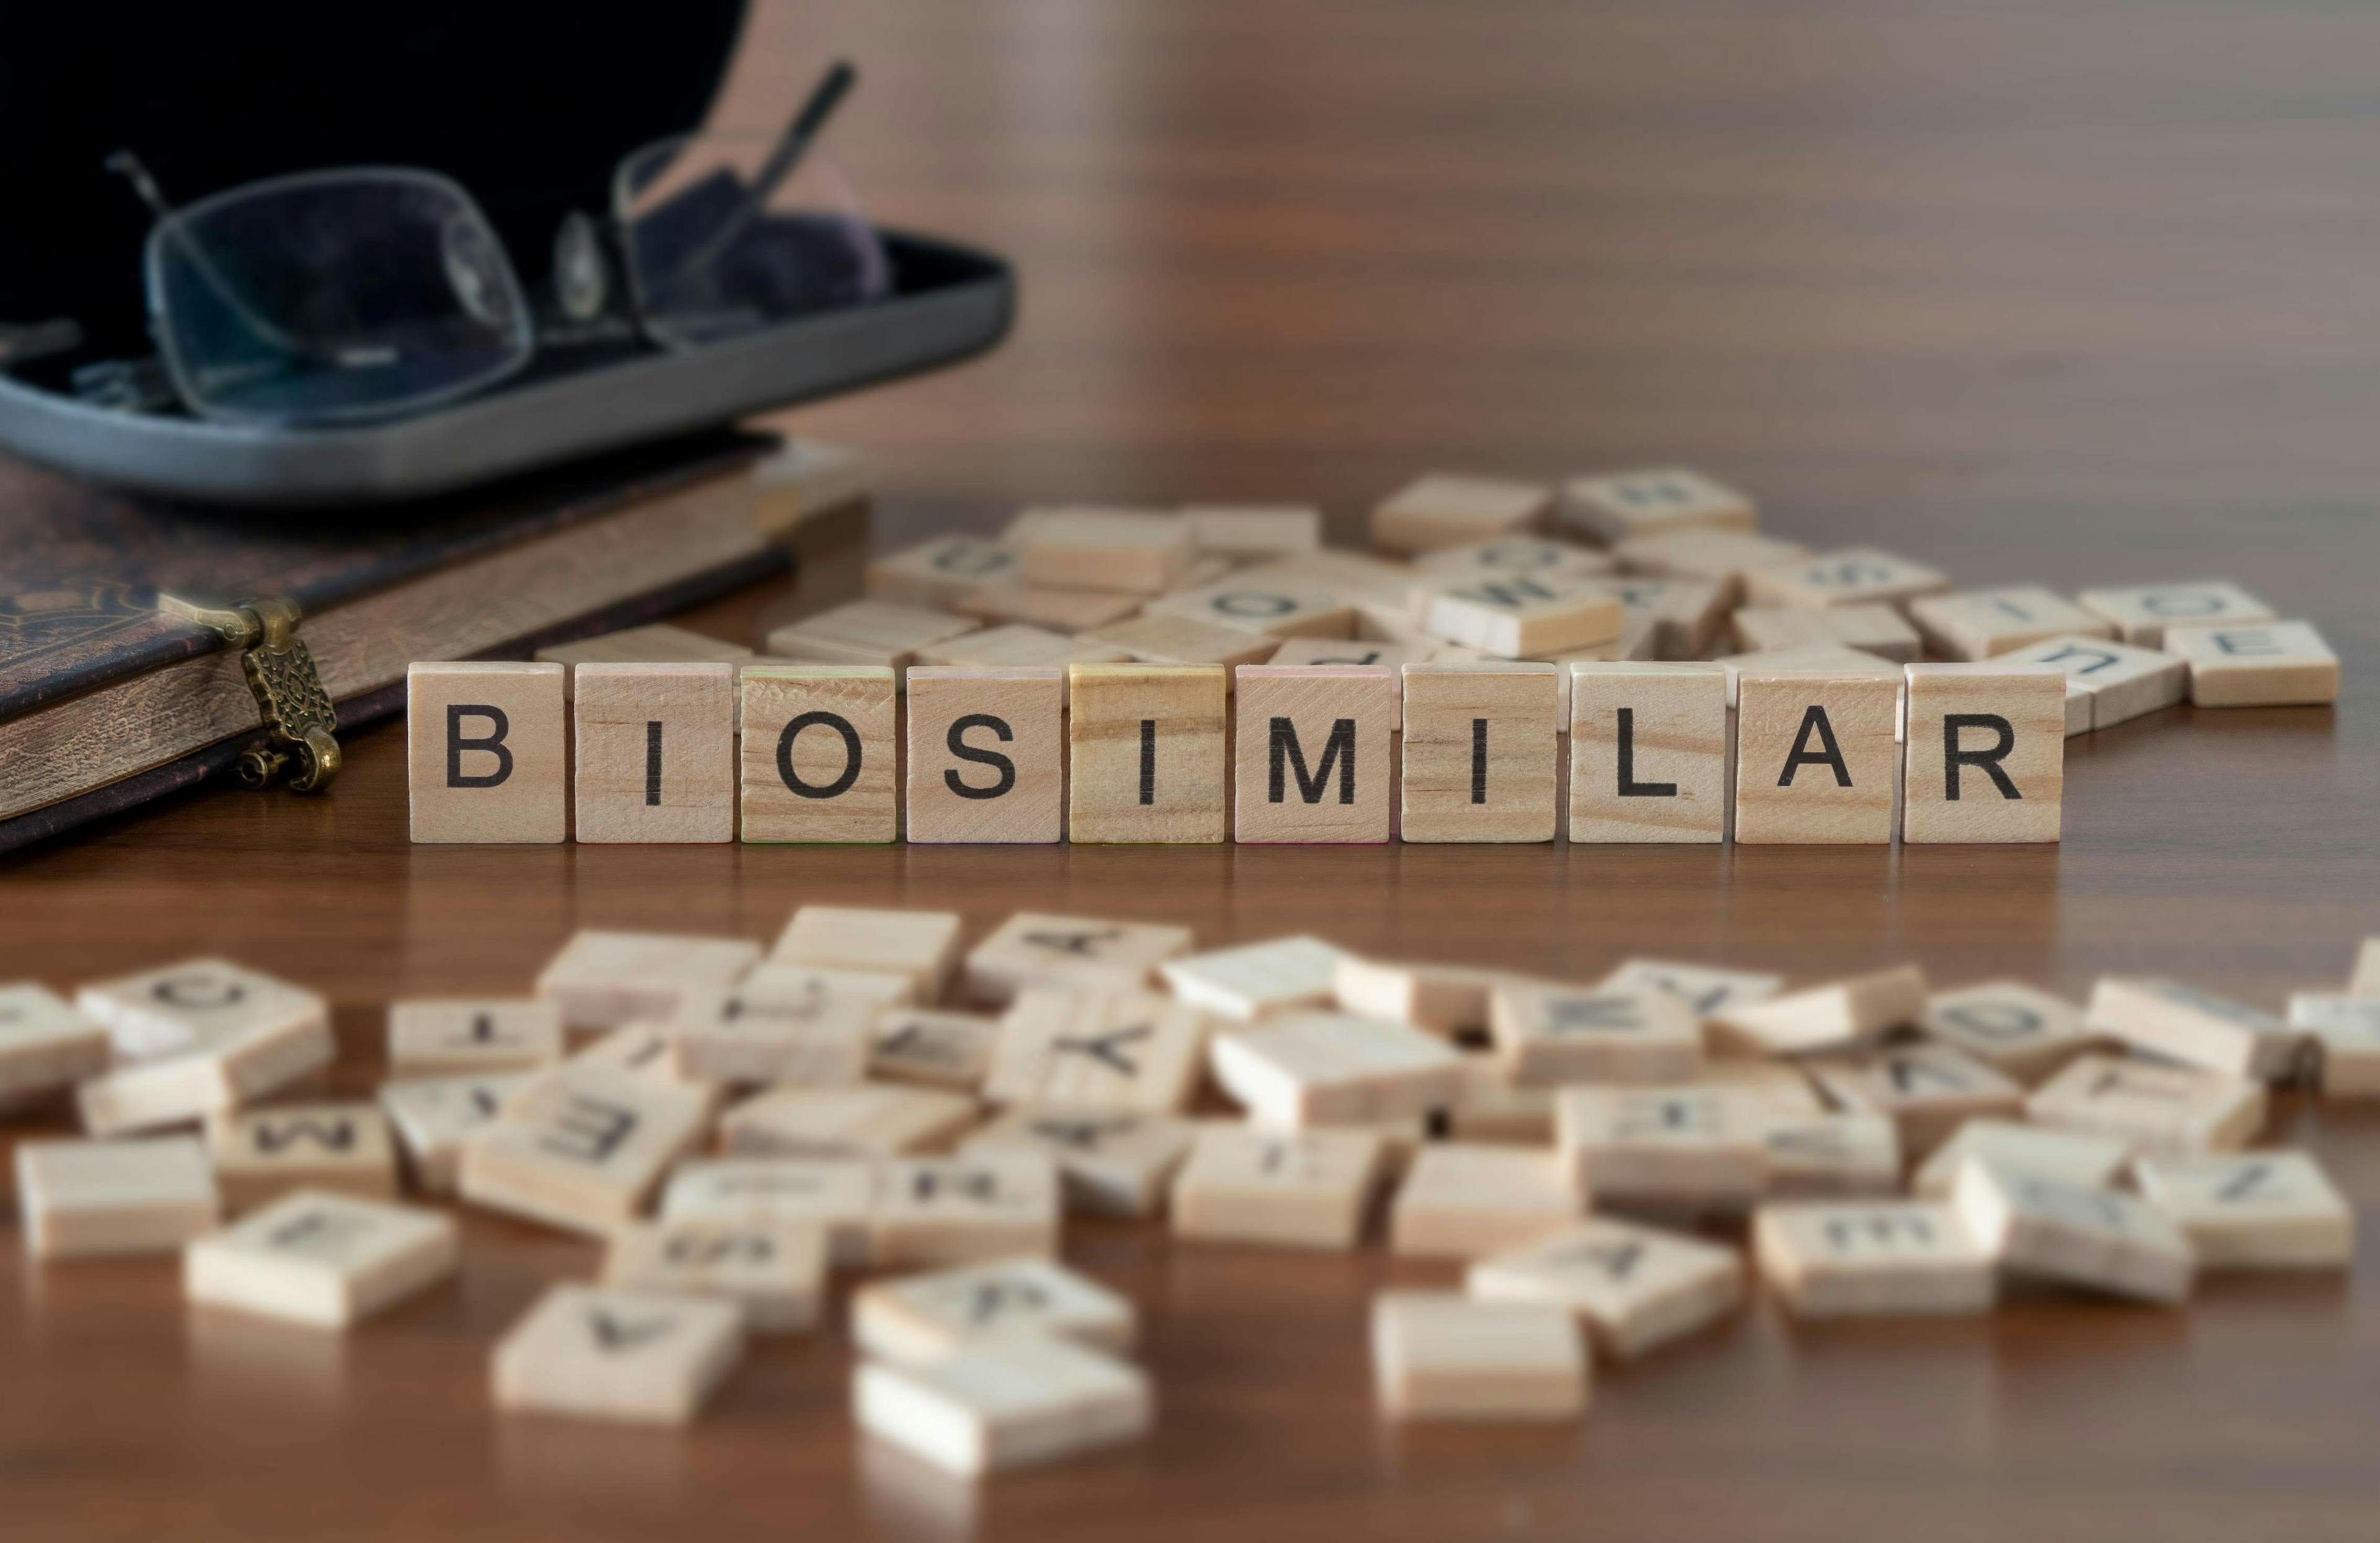 Biosimilar spelled on blocks | Image credit: lexiconimages - stock.adobe.com